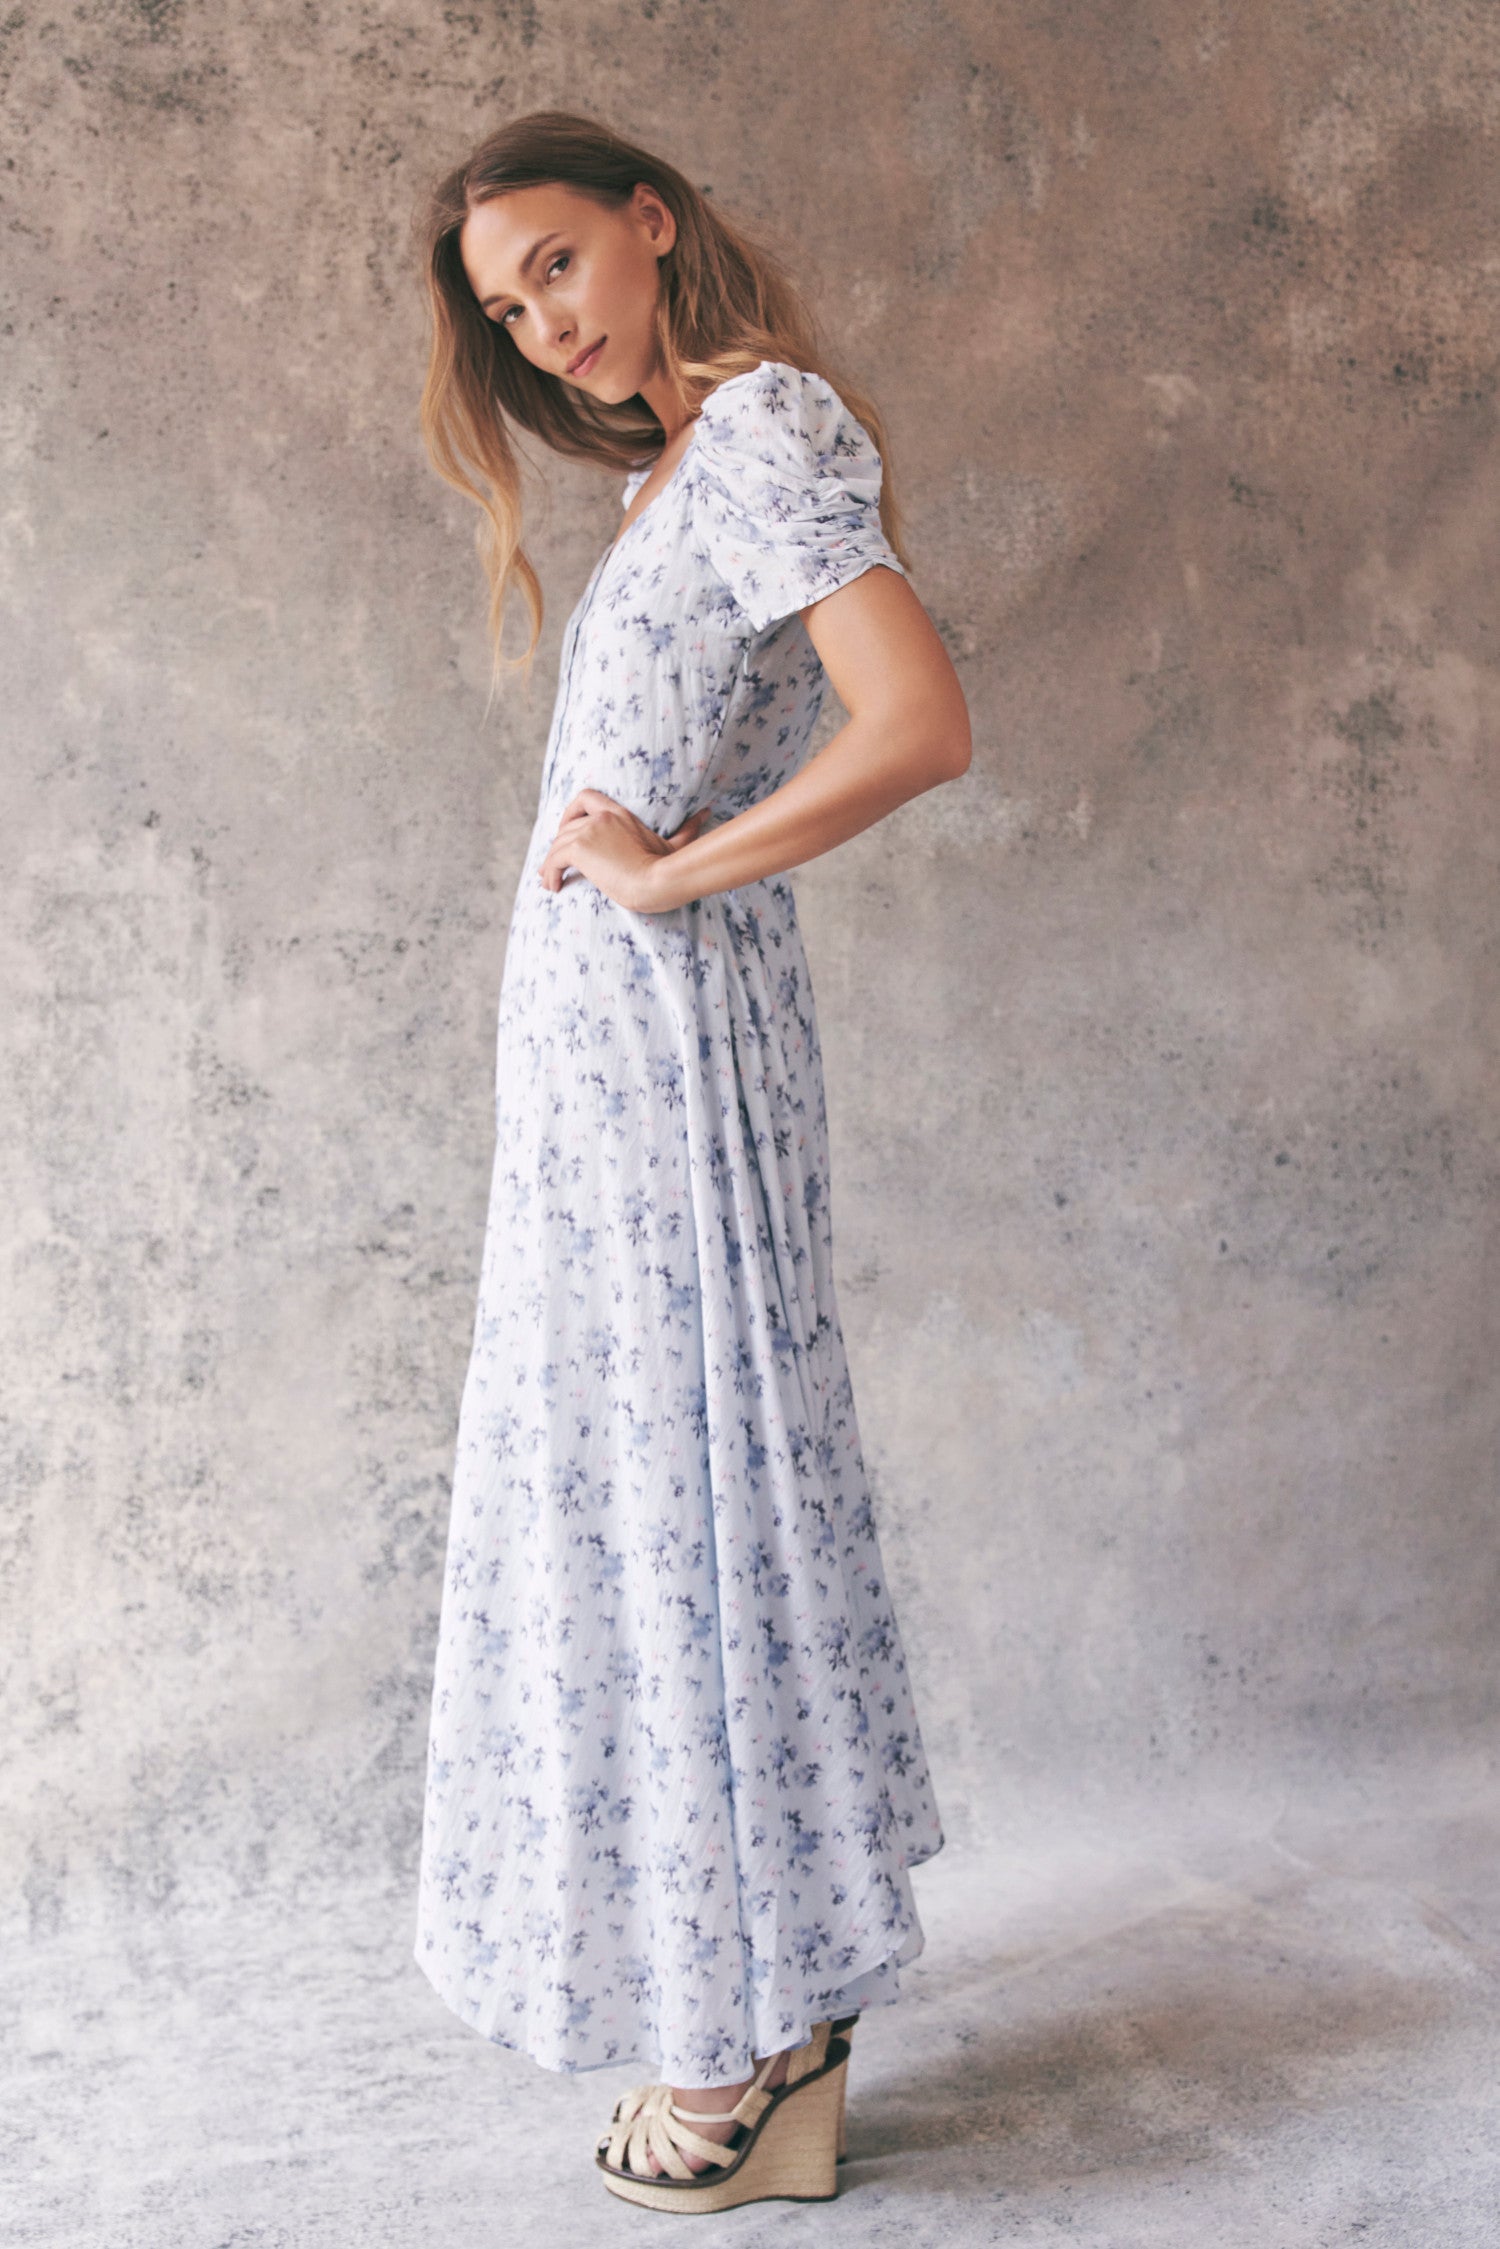 Side image of model wearing blue floral maxi dress